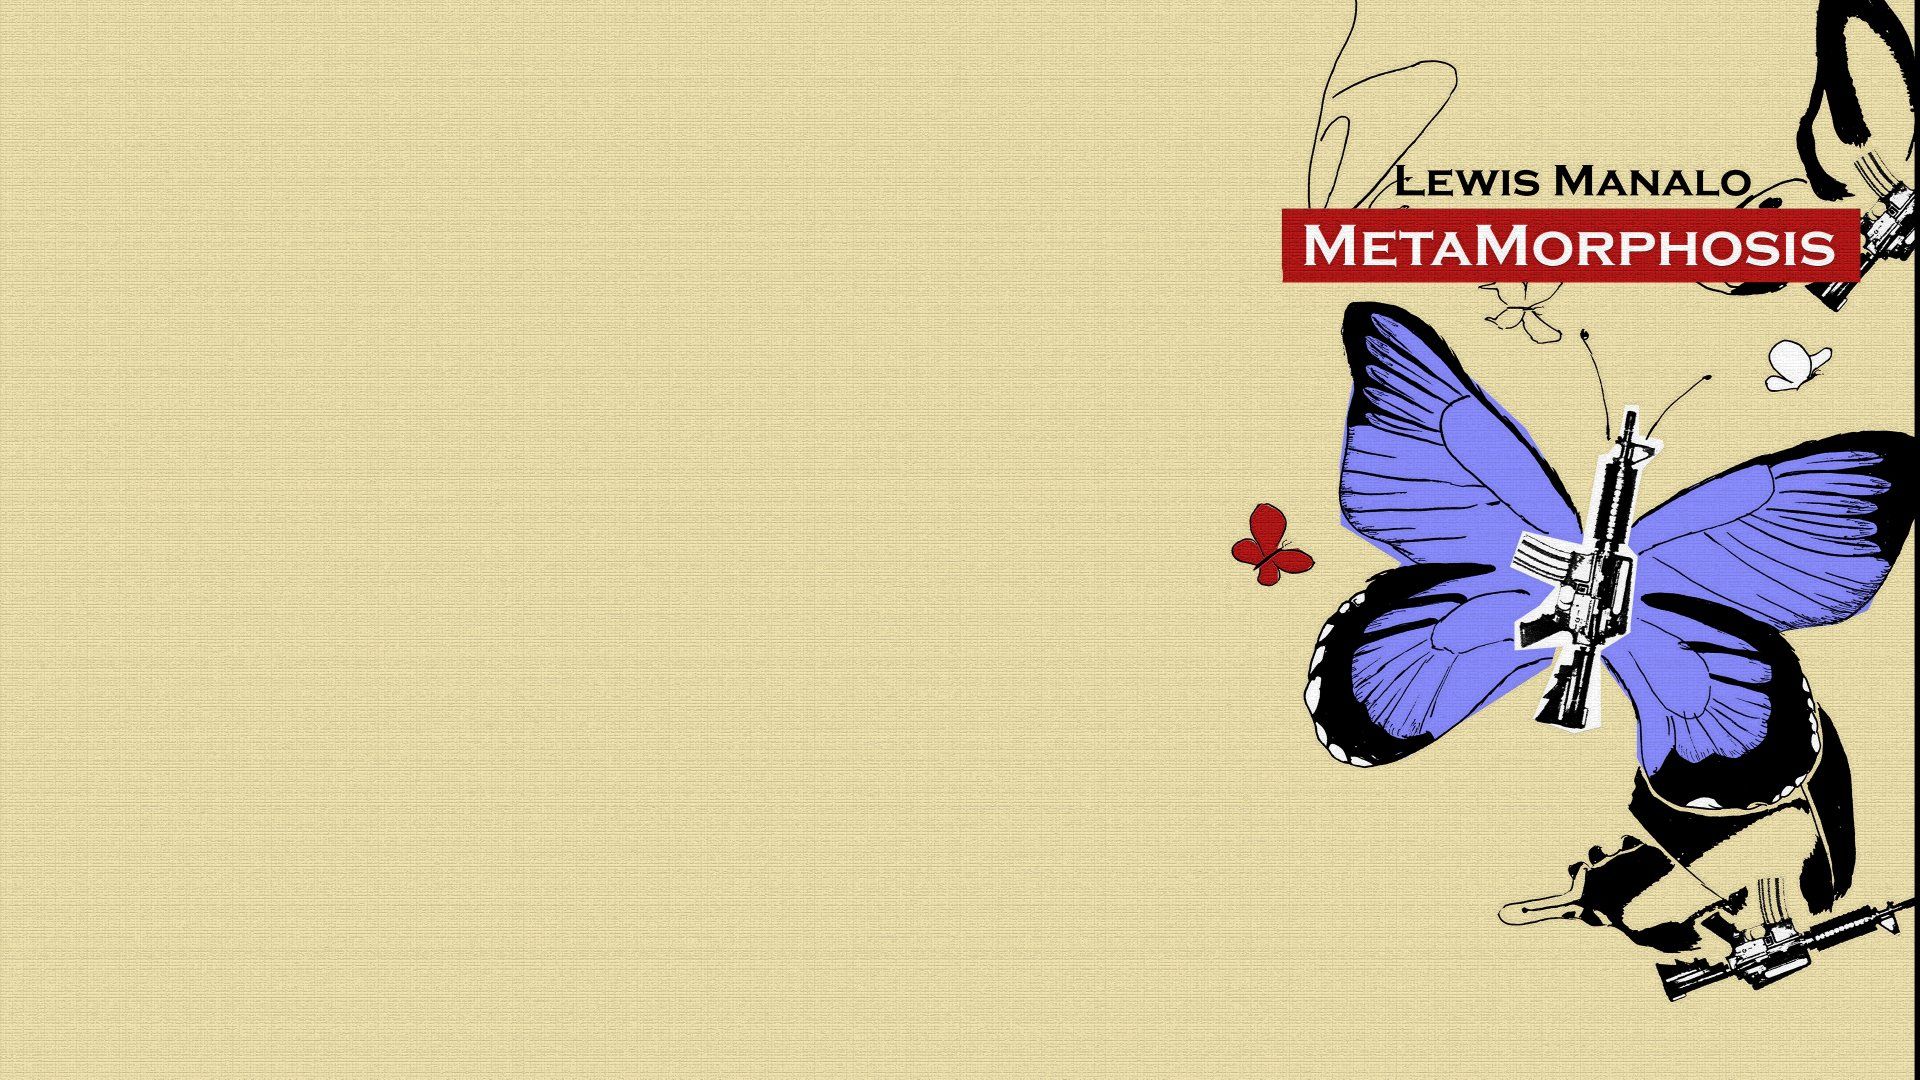 Metamorphosis HD Wallpaper and Background Image